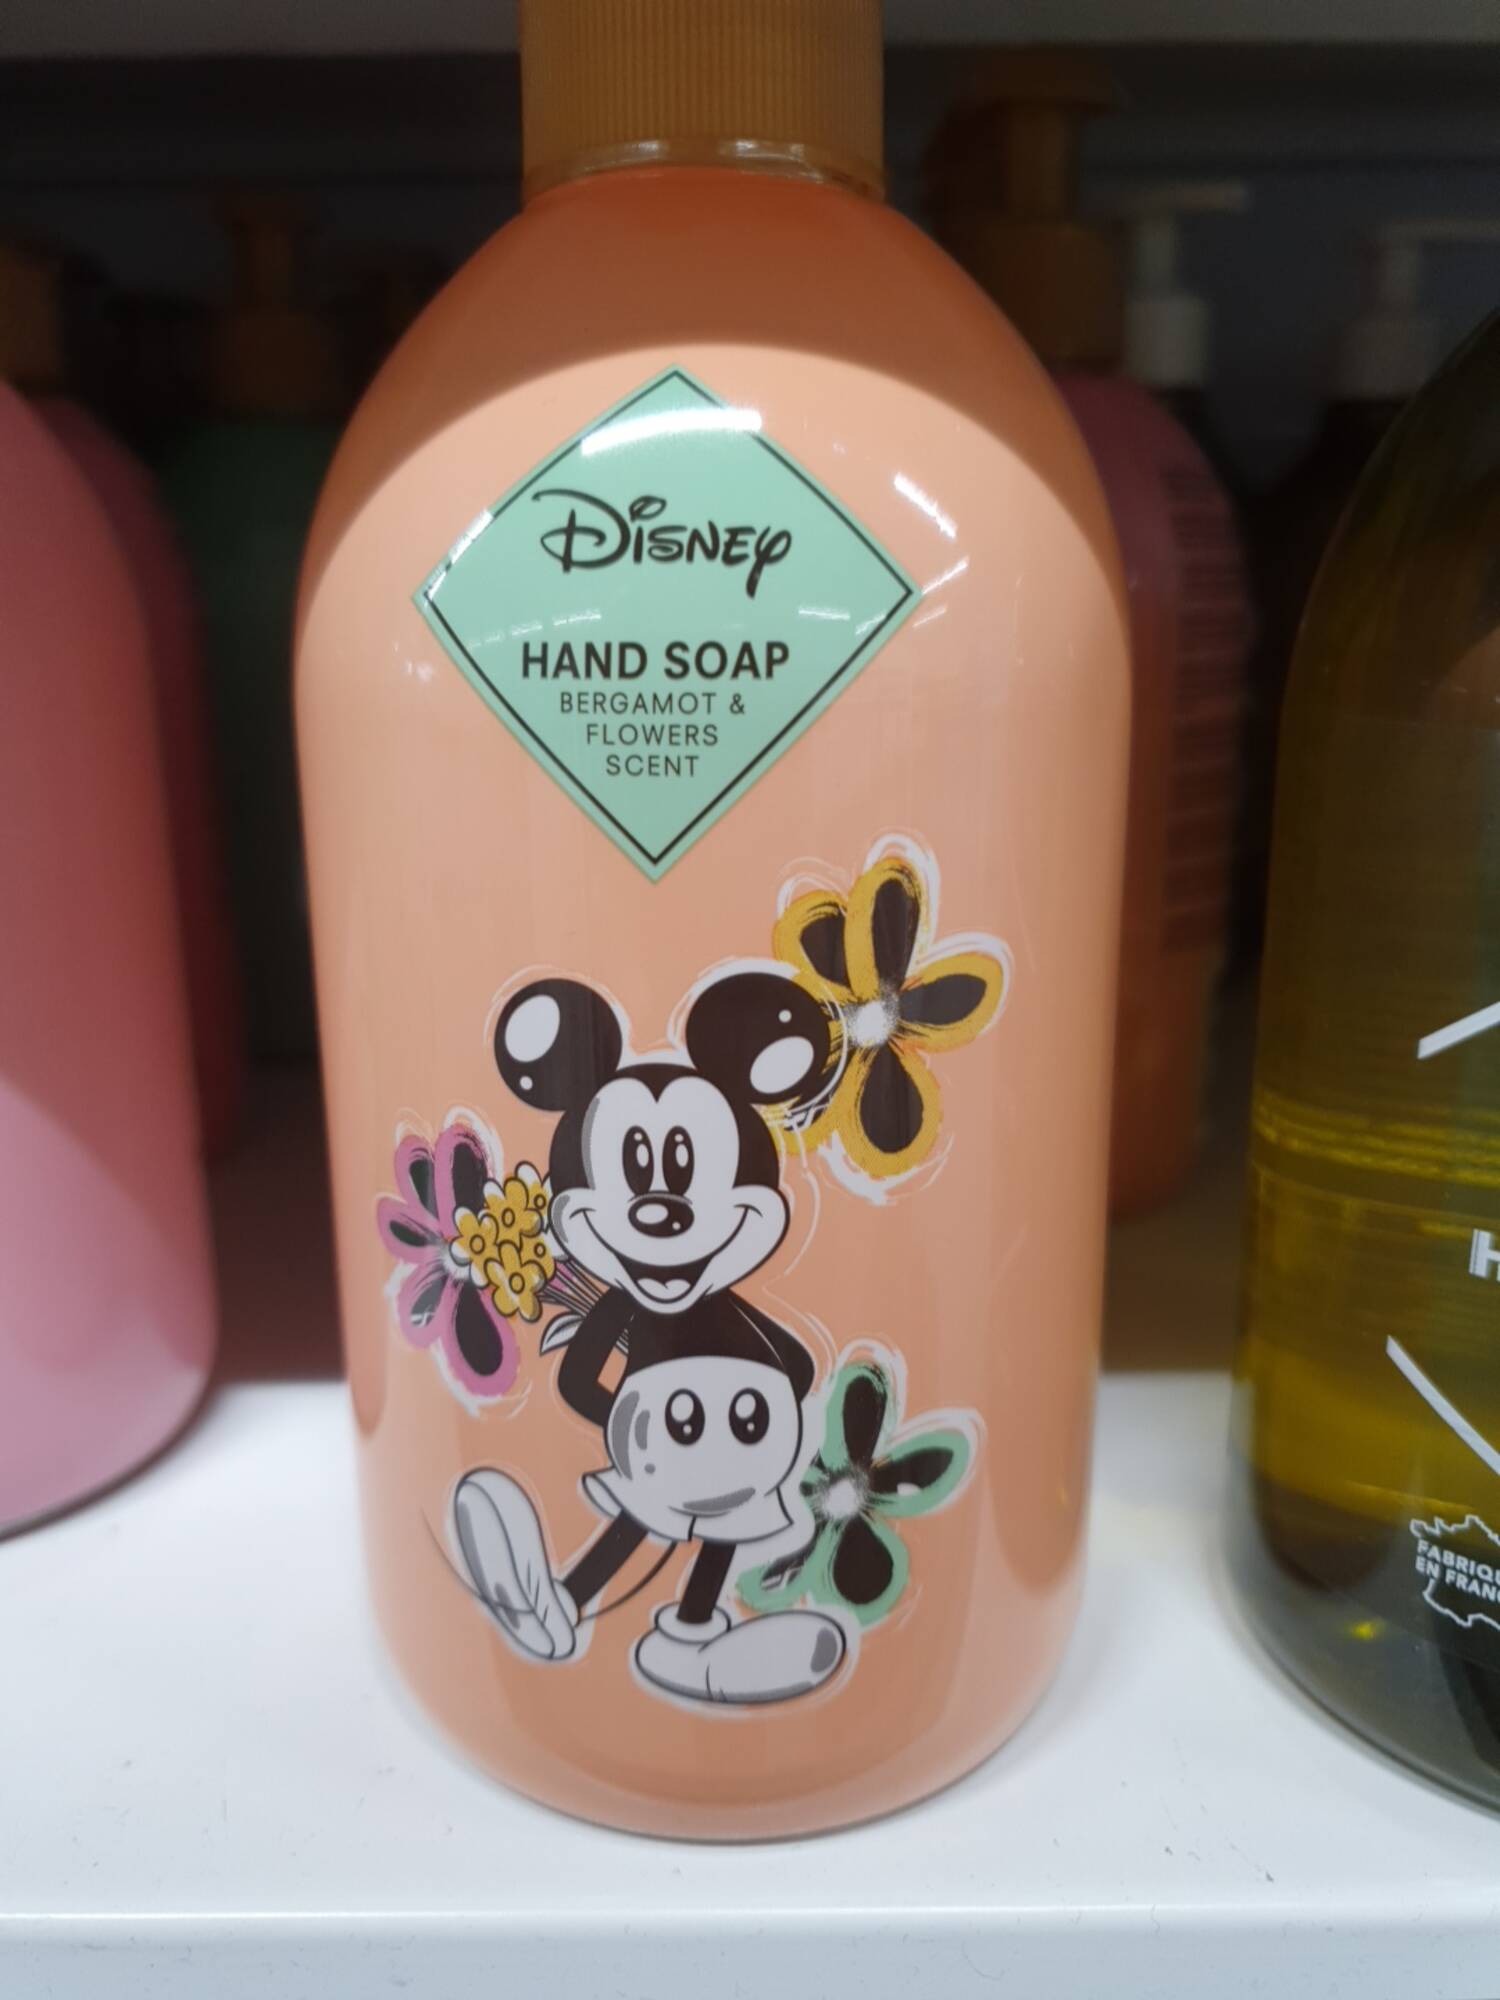 DISNEY - Bergamot & flowers scent - Hand soap